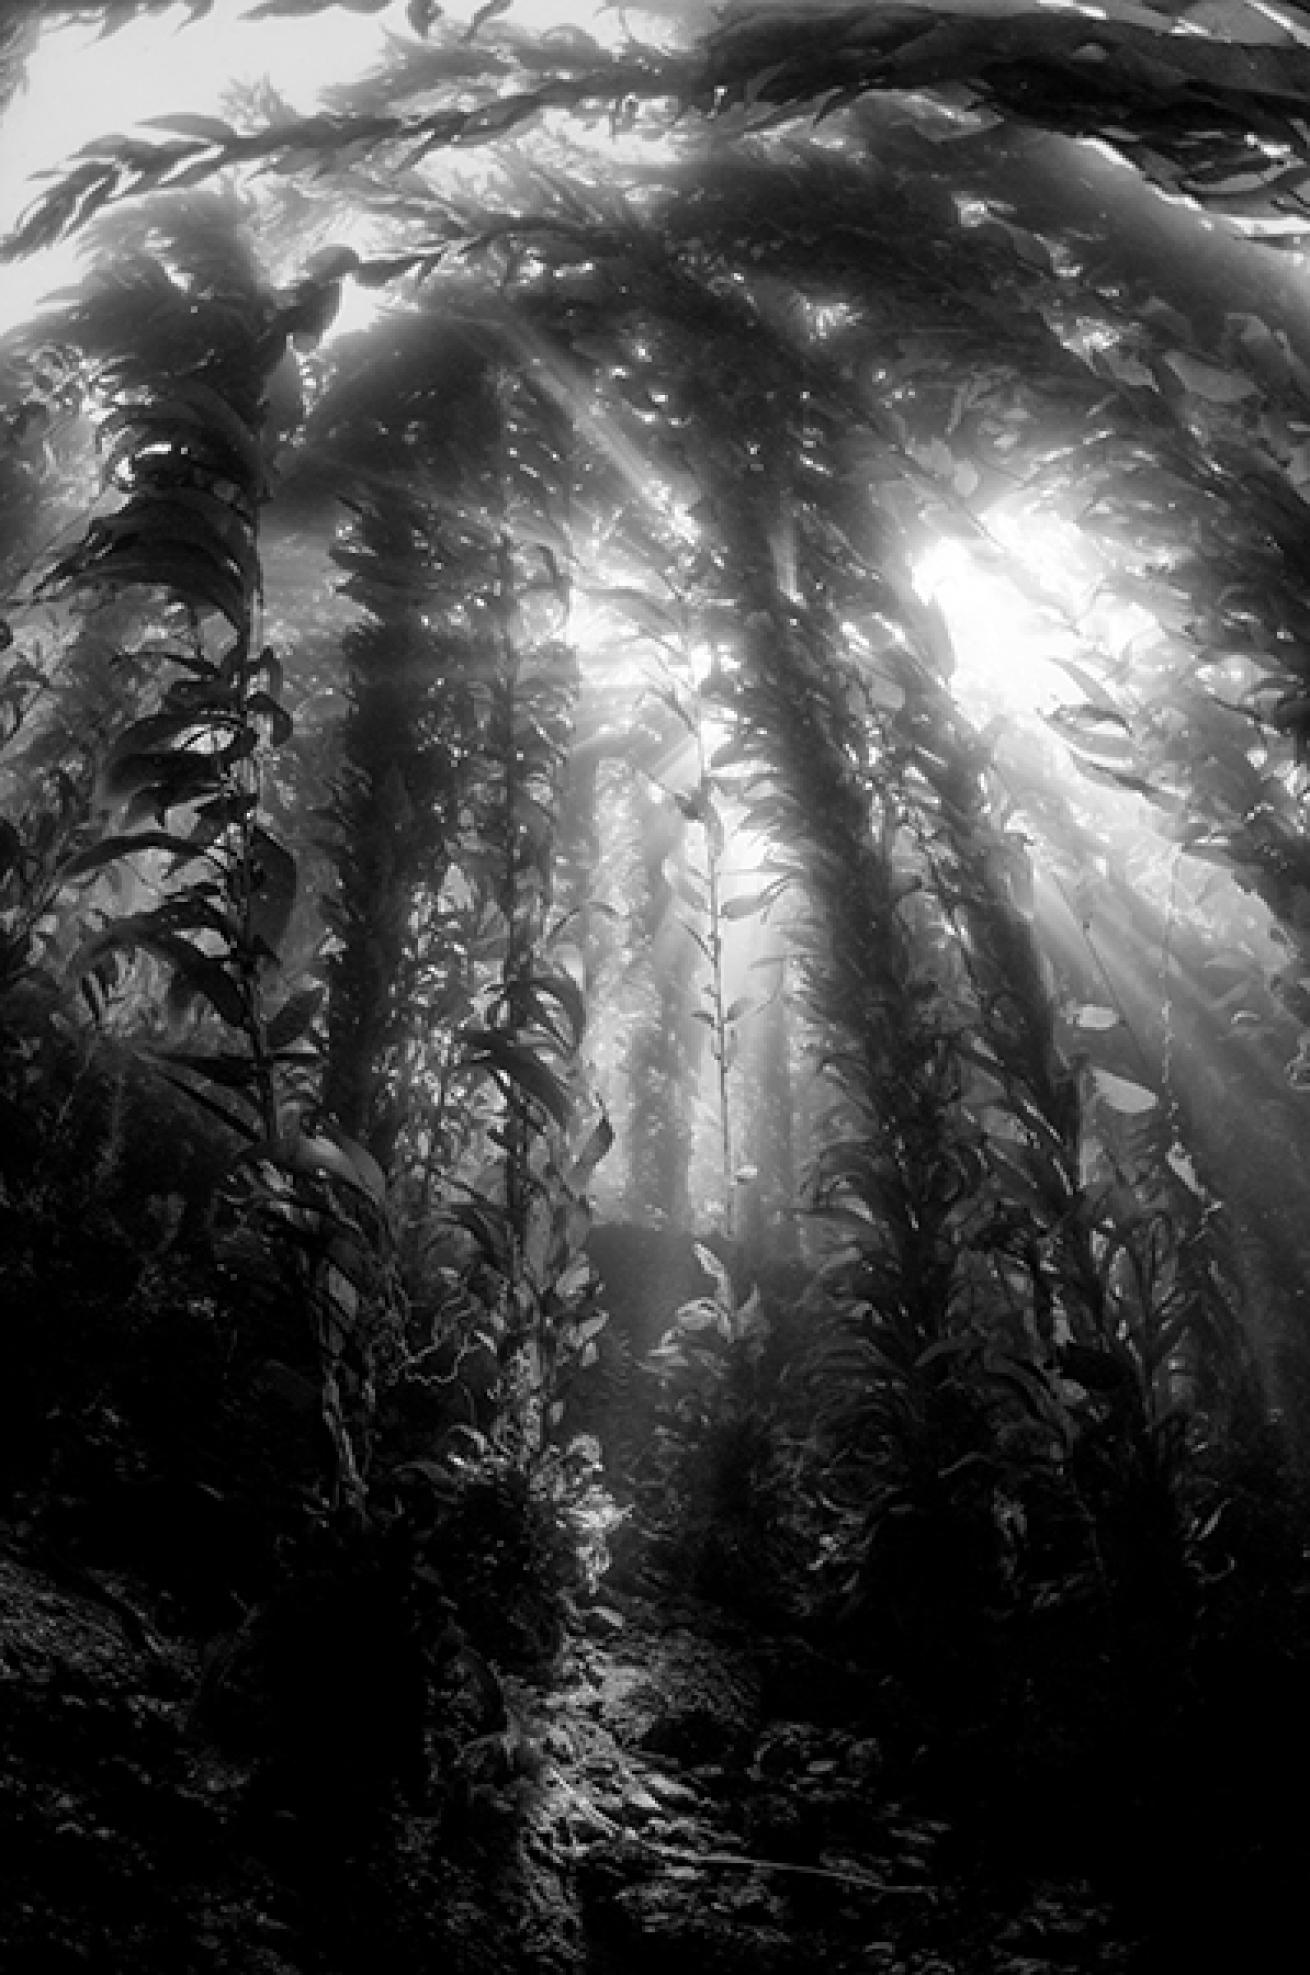 Kelp Forest